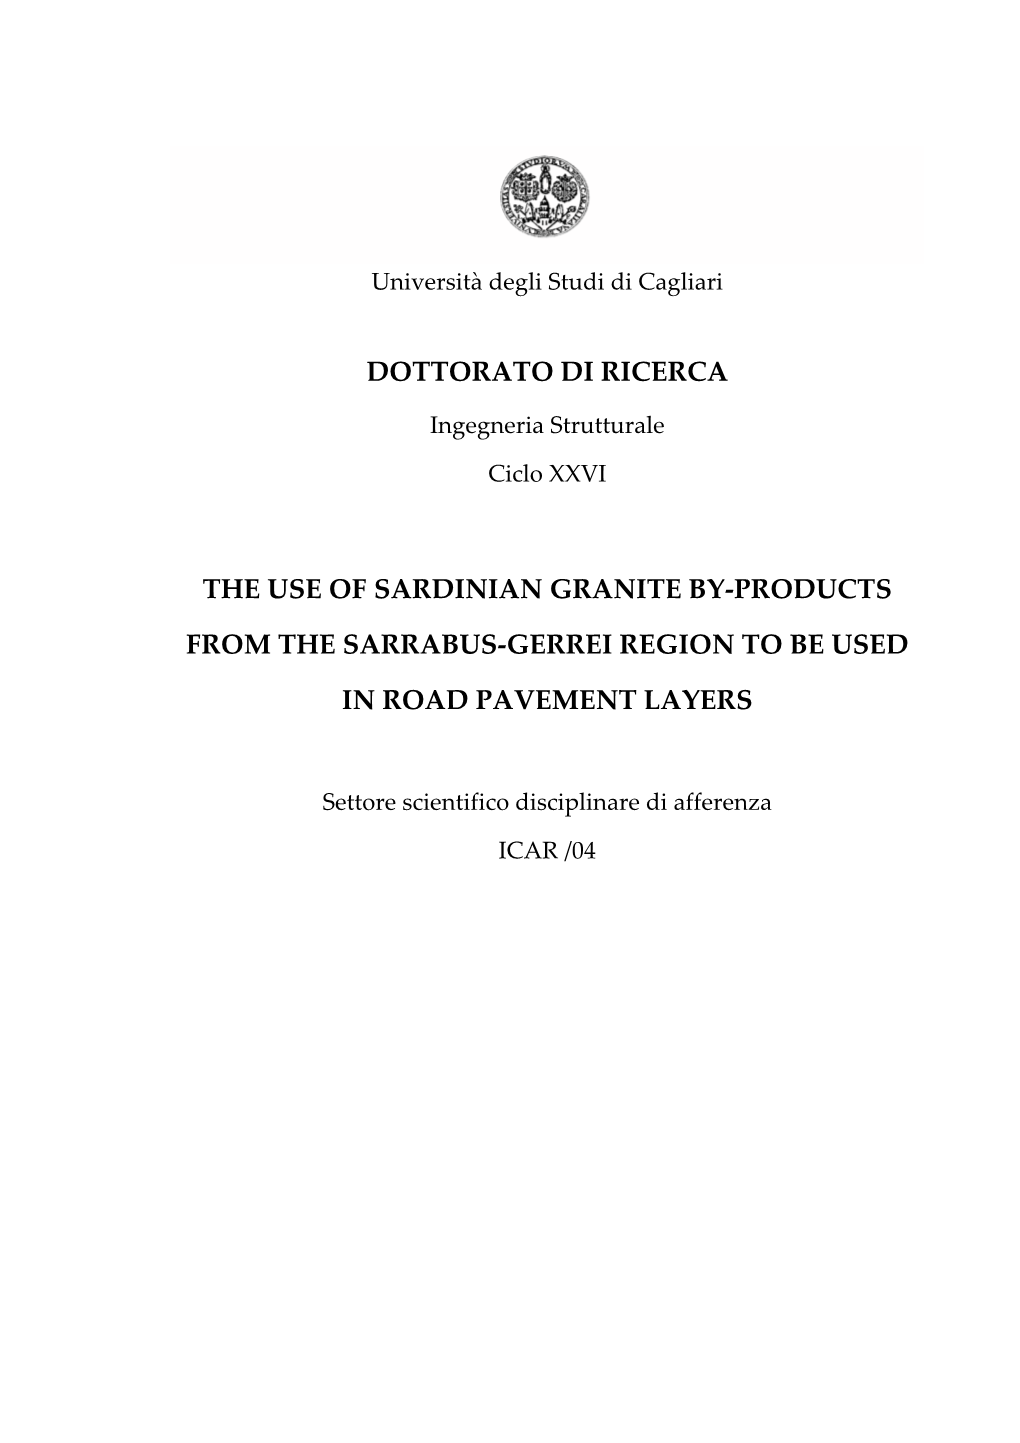 Dottorato Di Ricerca the Use of Sardinian Granite By